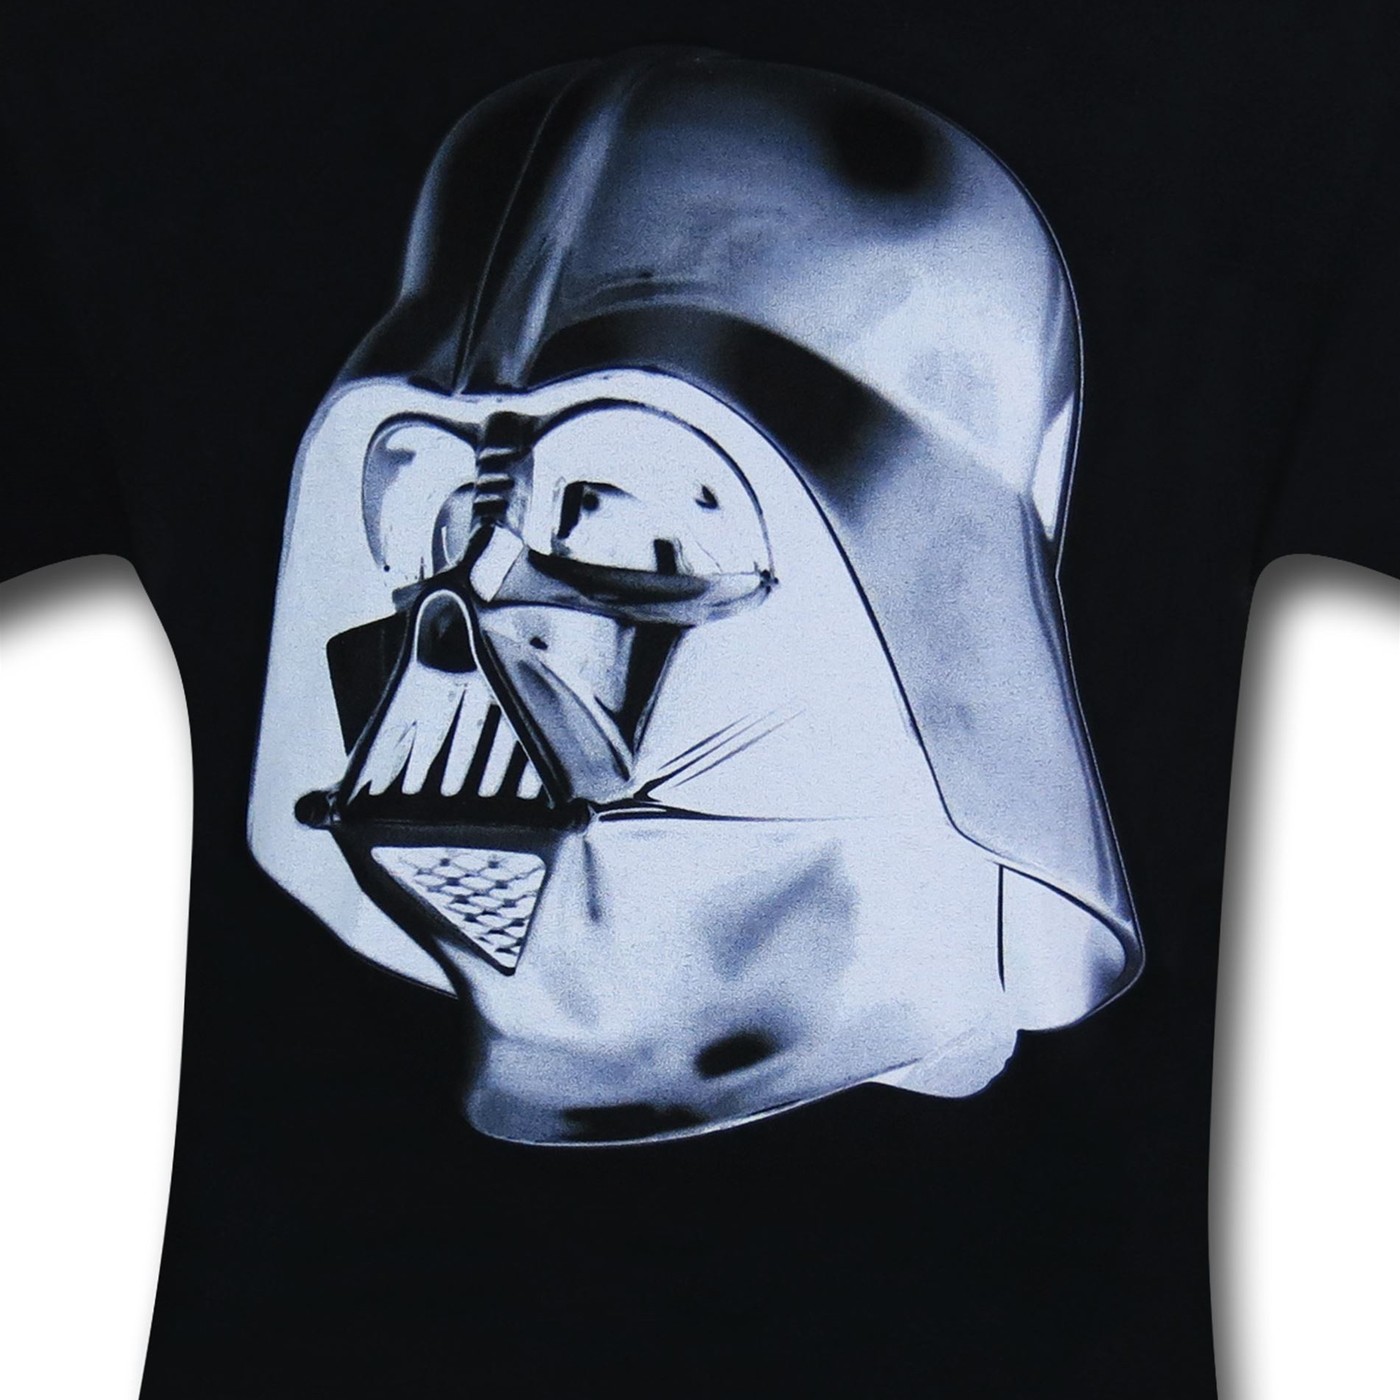 Star Wars Vader Inversion T-Shirt